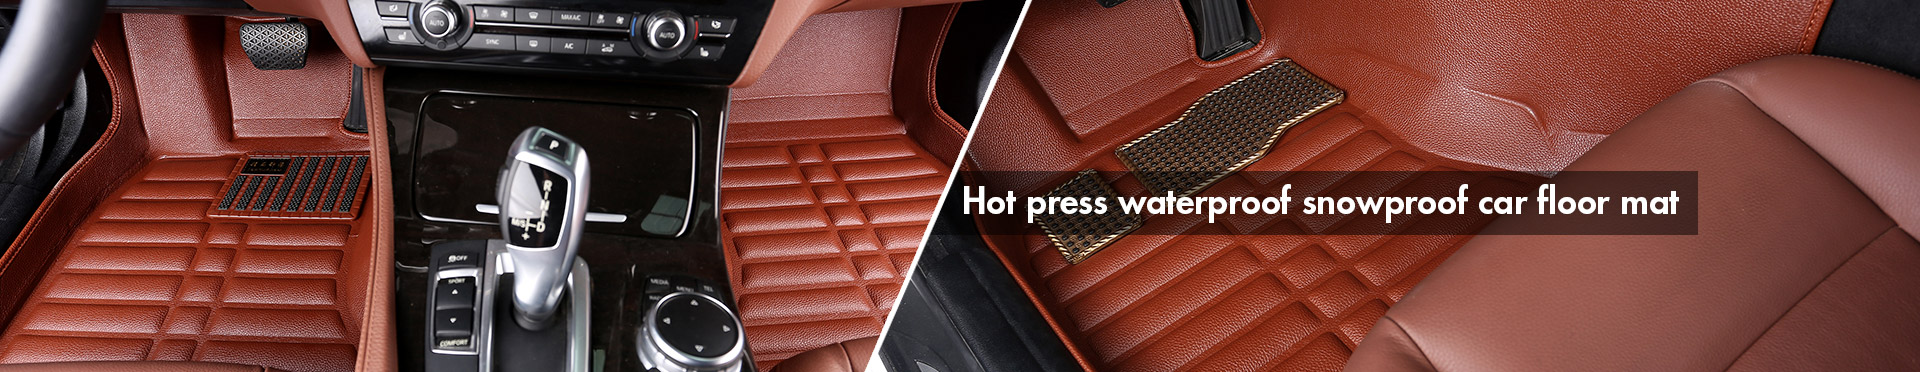 Hot press waterproof snowproof car floor mat